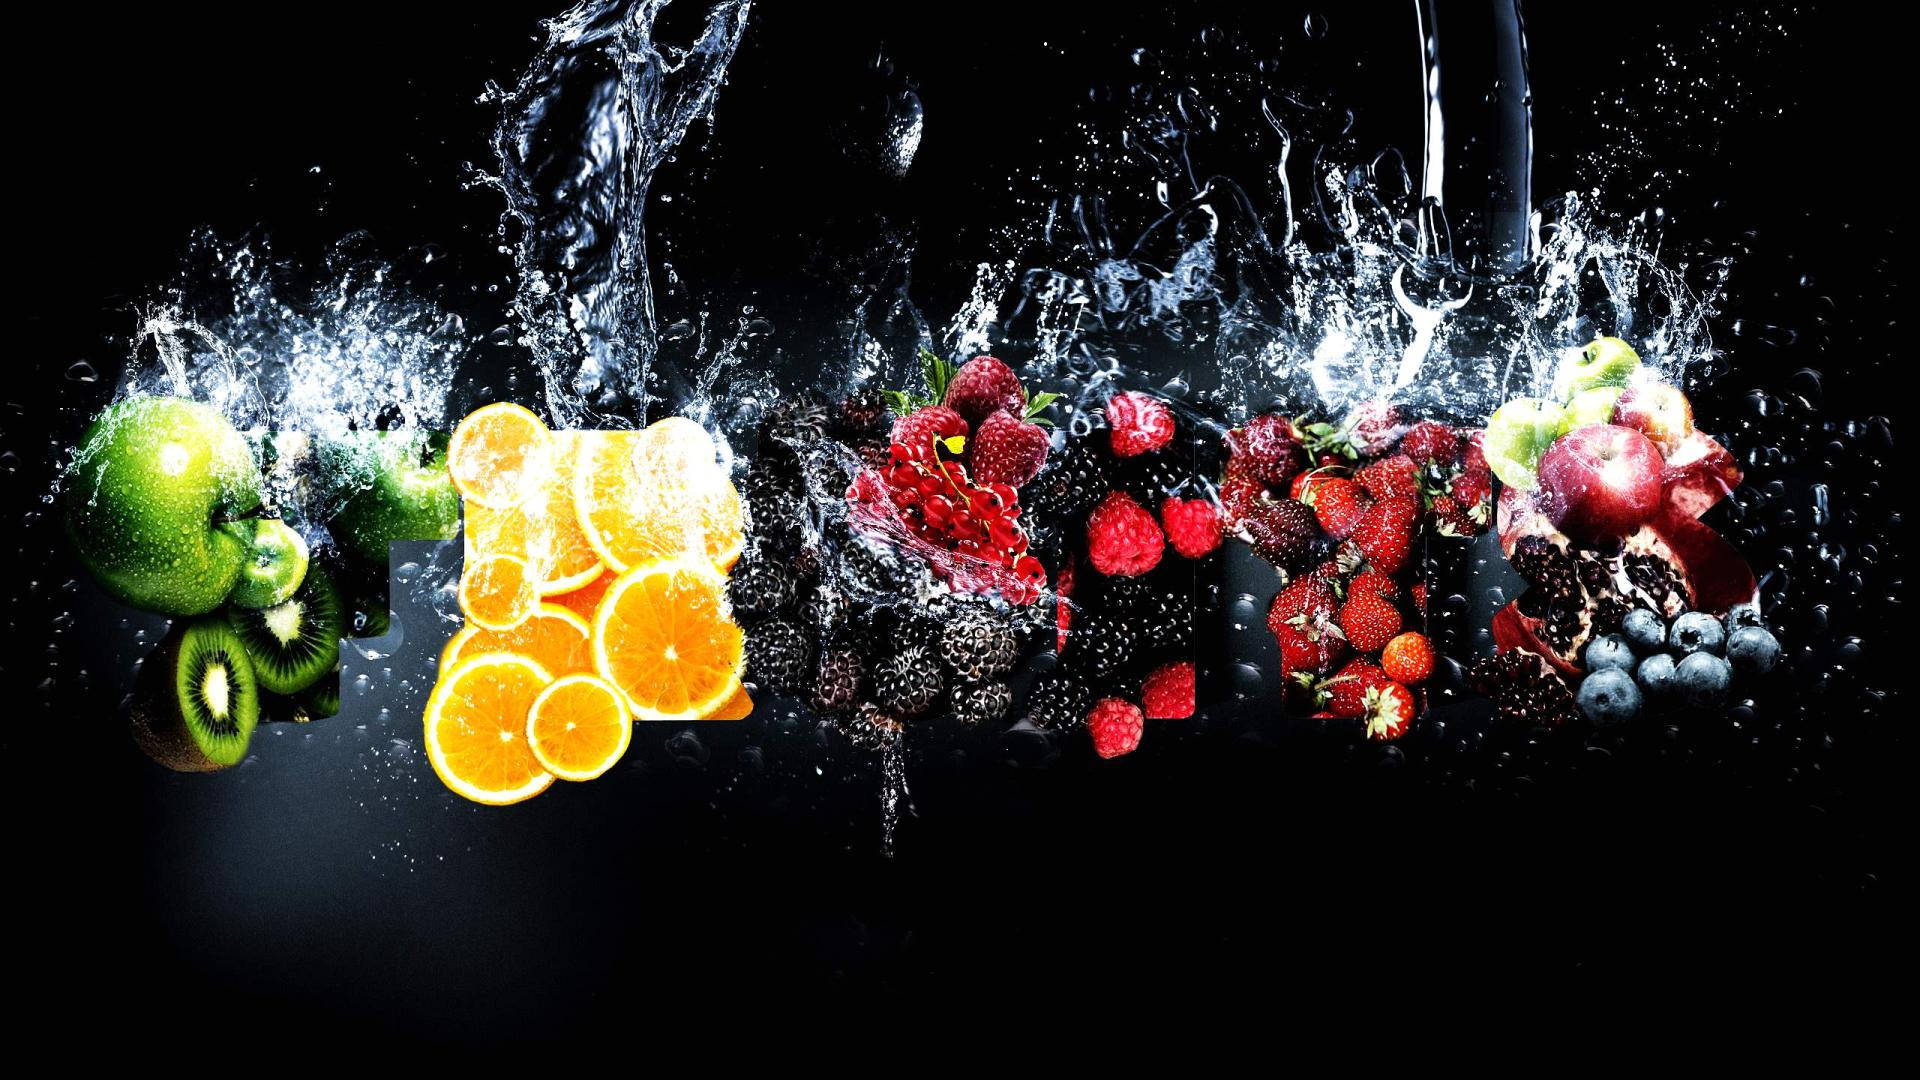 Fruit Flavored Drink Background